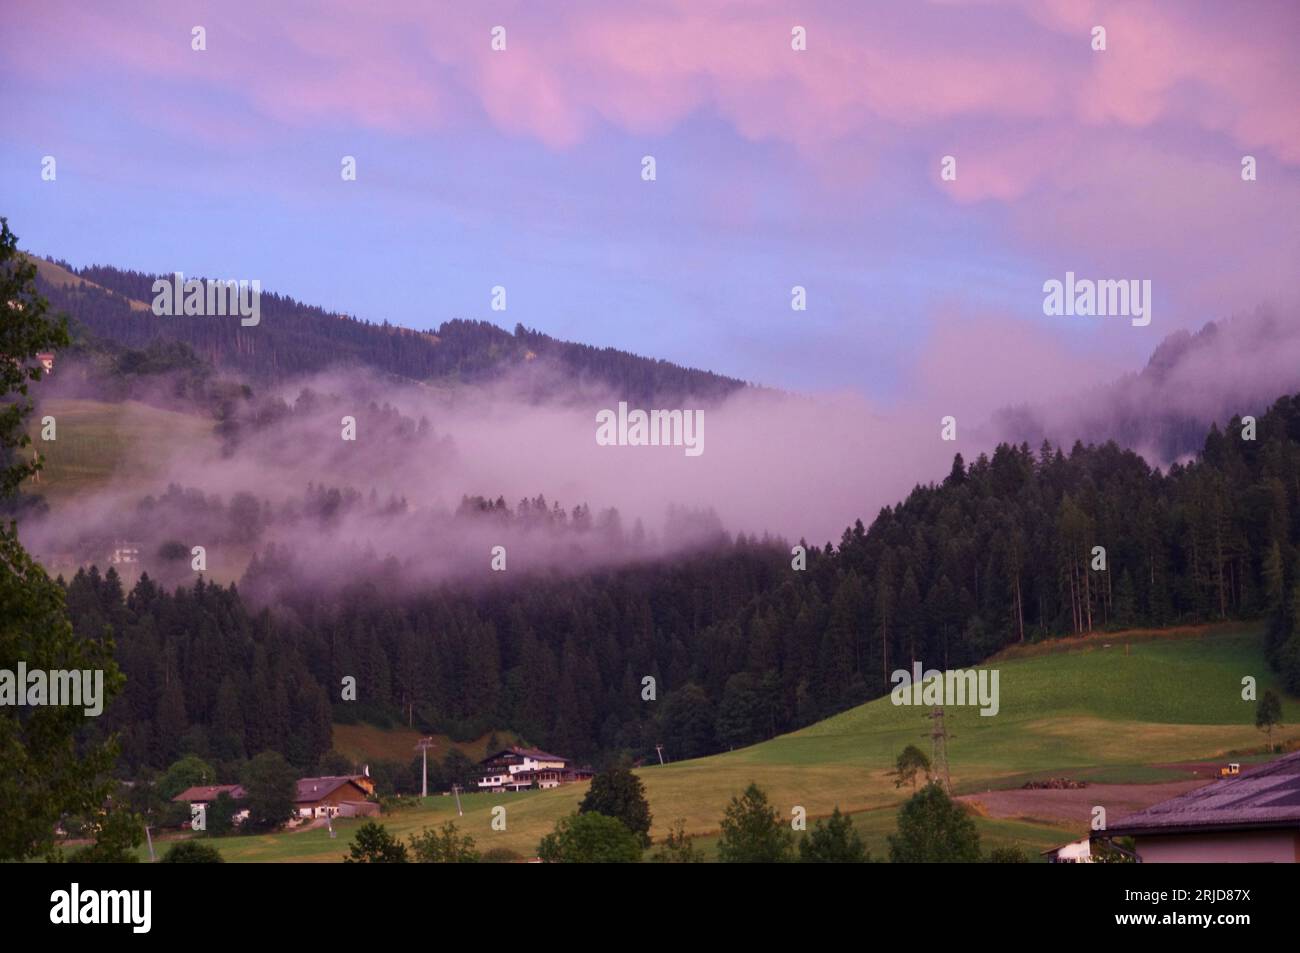 Söll, Austria,Mist rolling over the hillside under a pink sky. Stock Photo